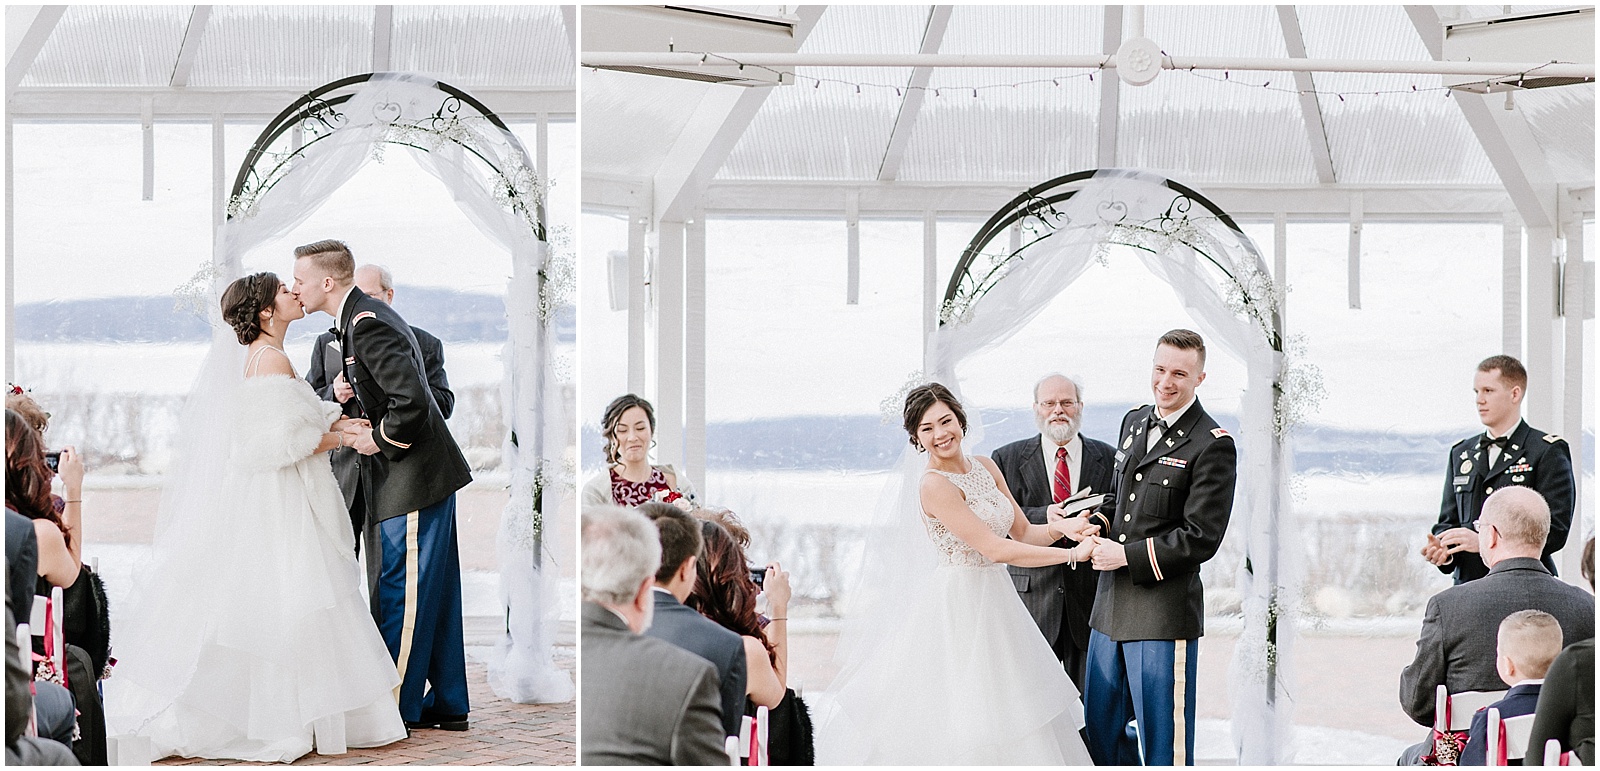 Bride and groom outdoor wedding ceremony